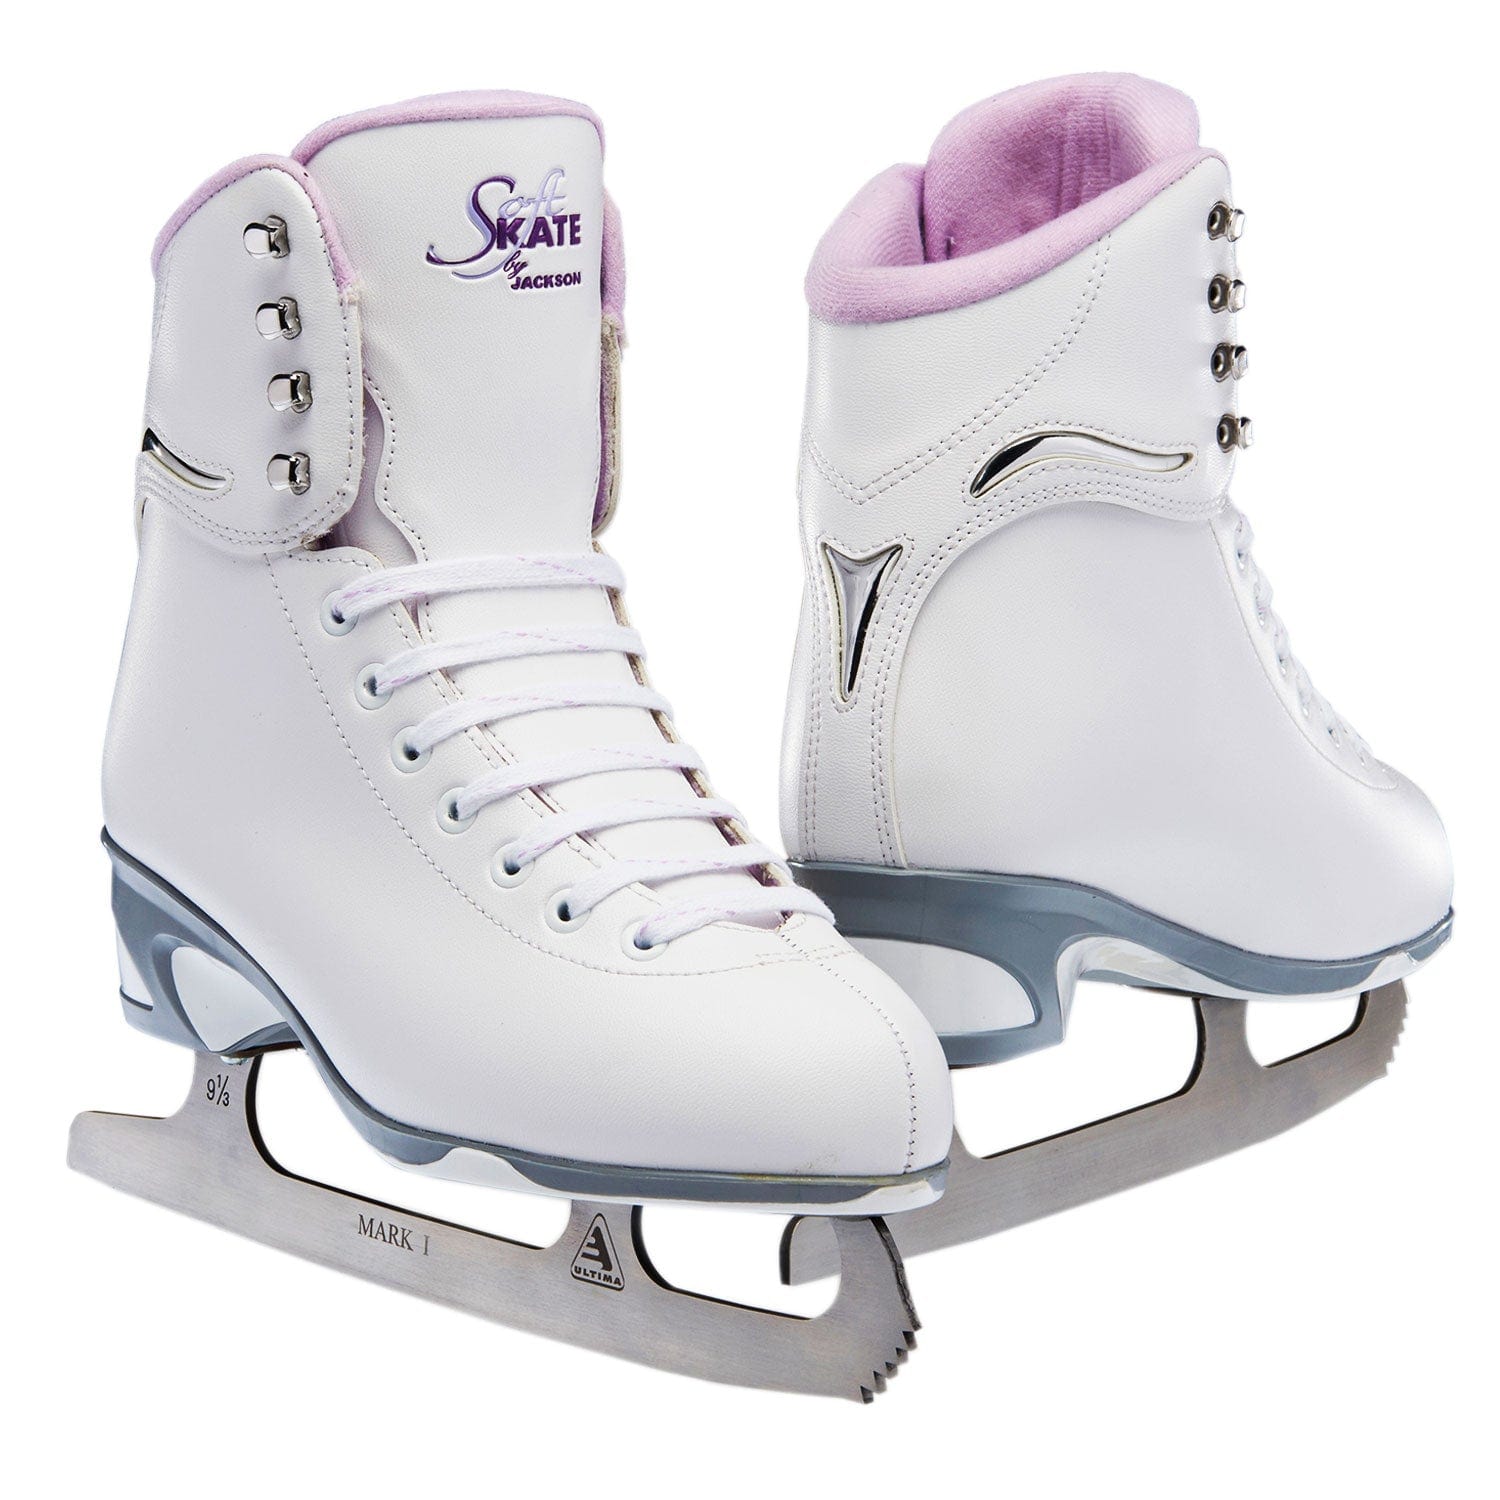 Jackson Purple SoftSkate JS181 Girls Ice Skates - Shop in Can $